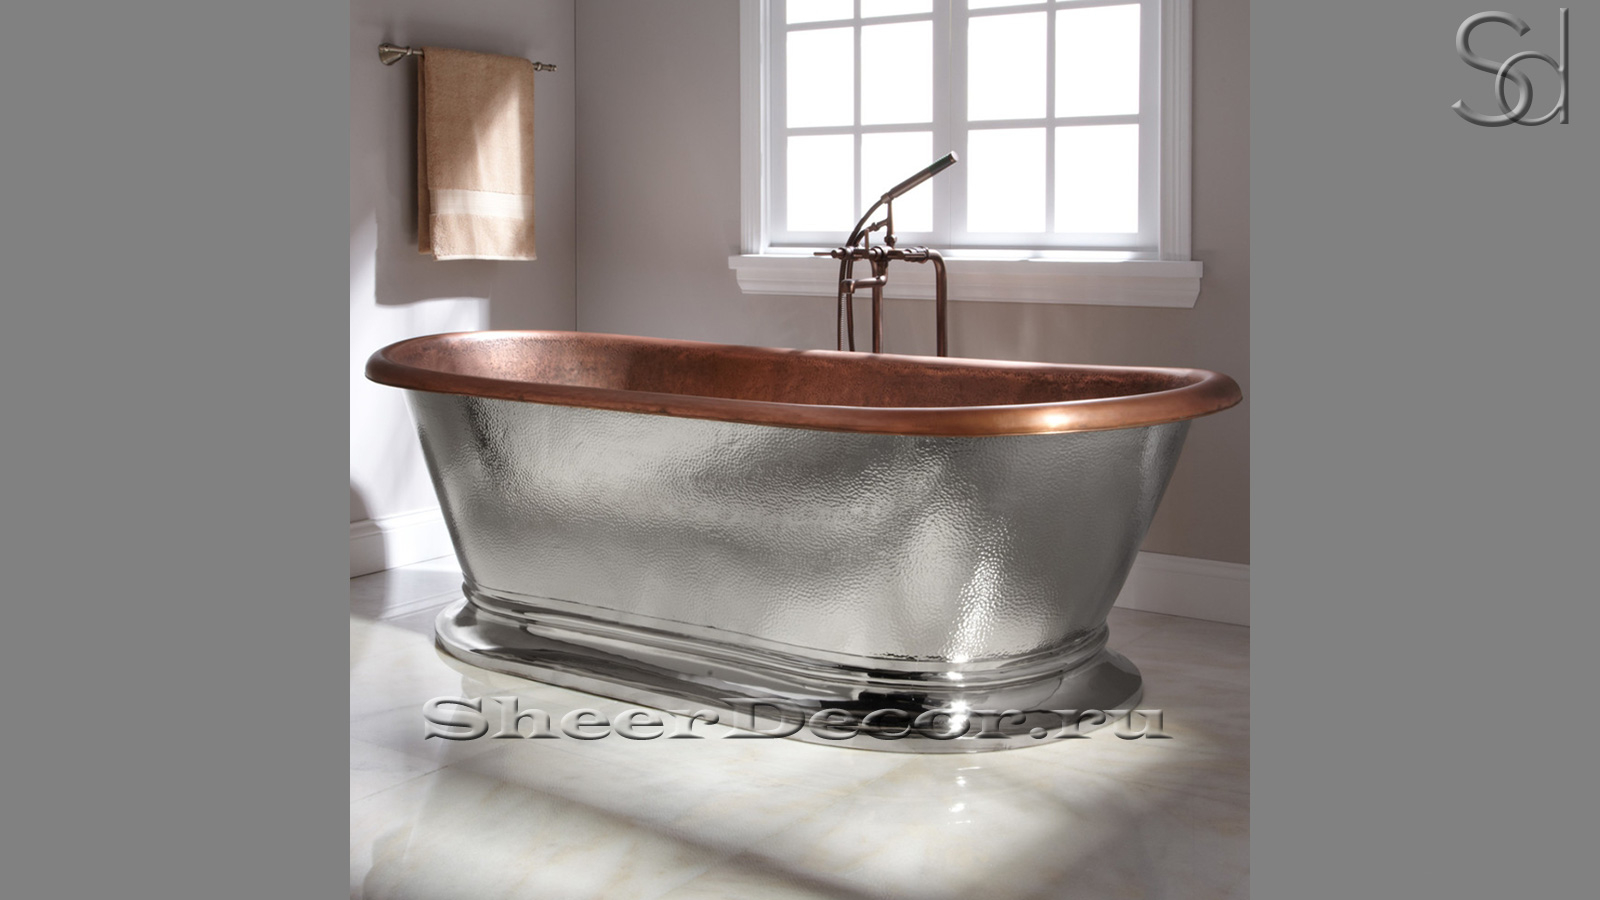 Эксклюзивная бронзовая ванна Sandra M2 Chrome Bronze 068303652 производство ИНДОНЕЗИЯ_1